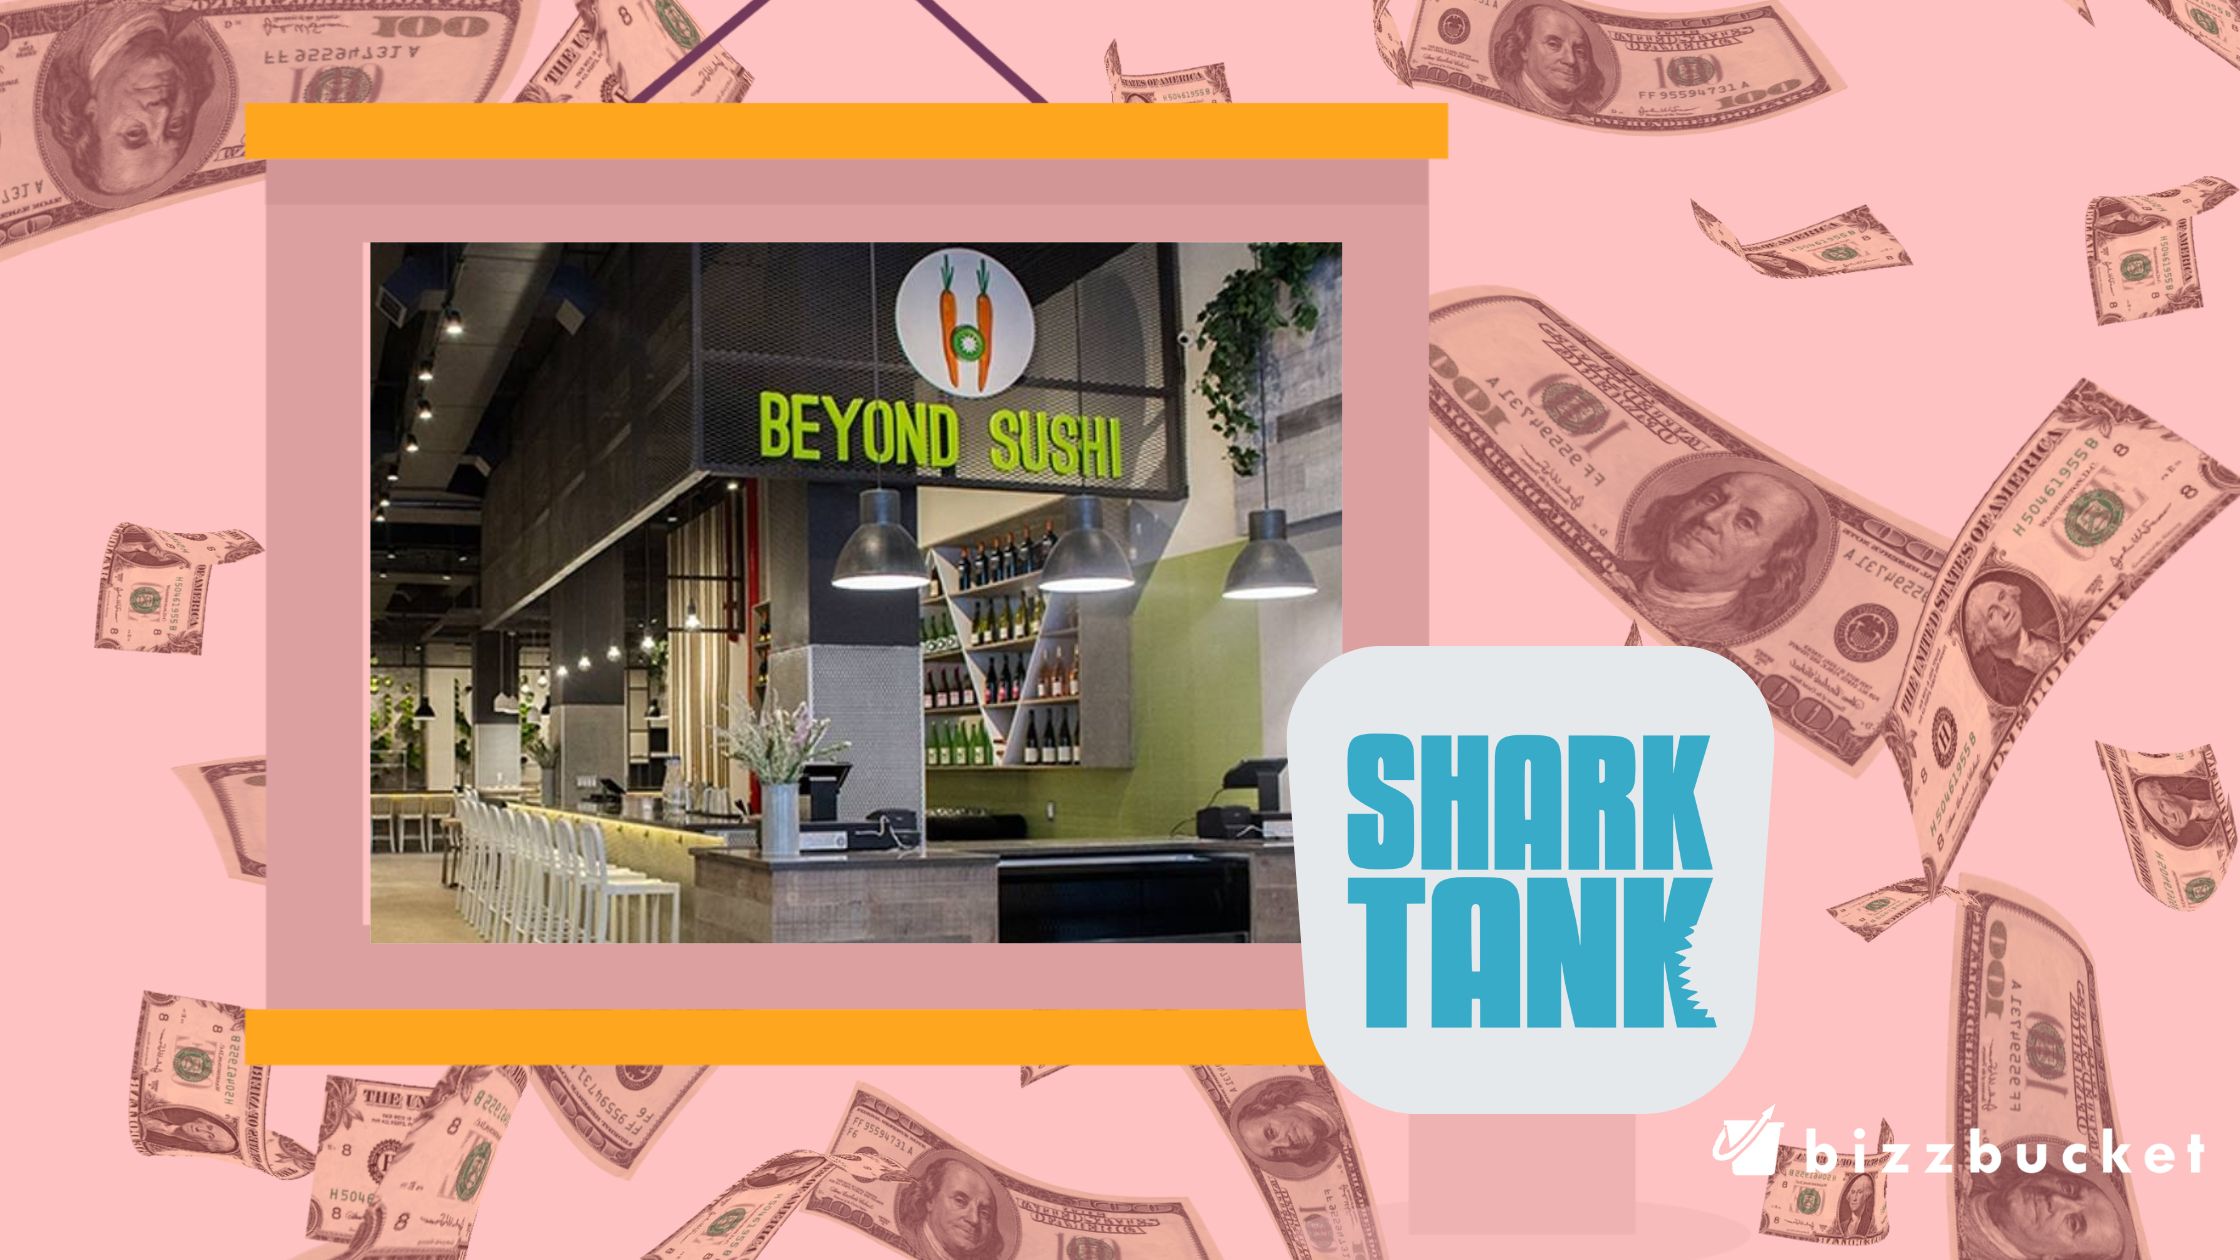 Beyond Sushi shark tank update